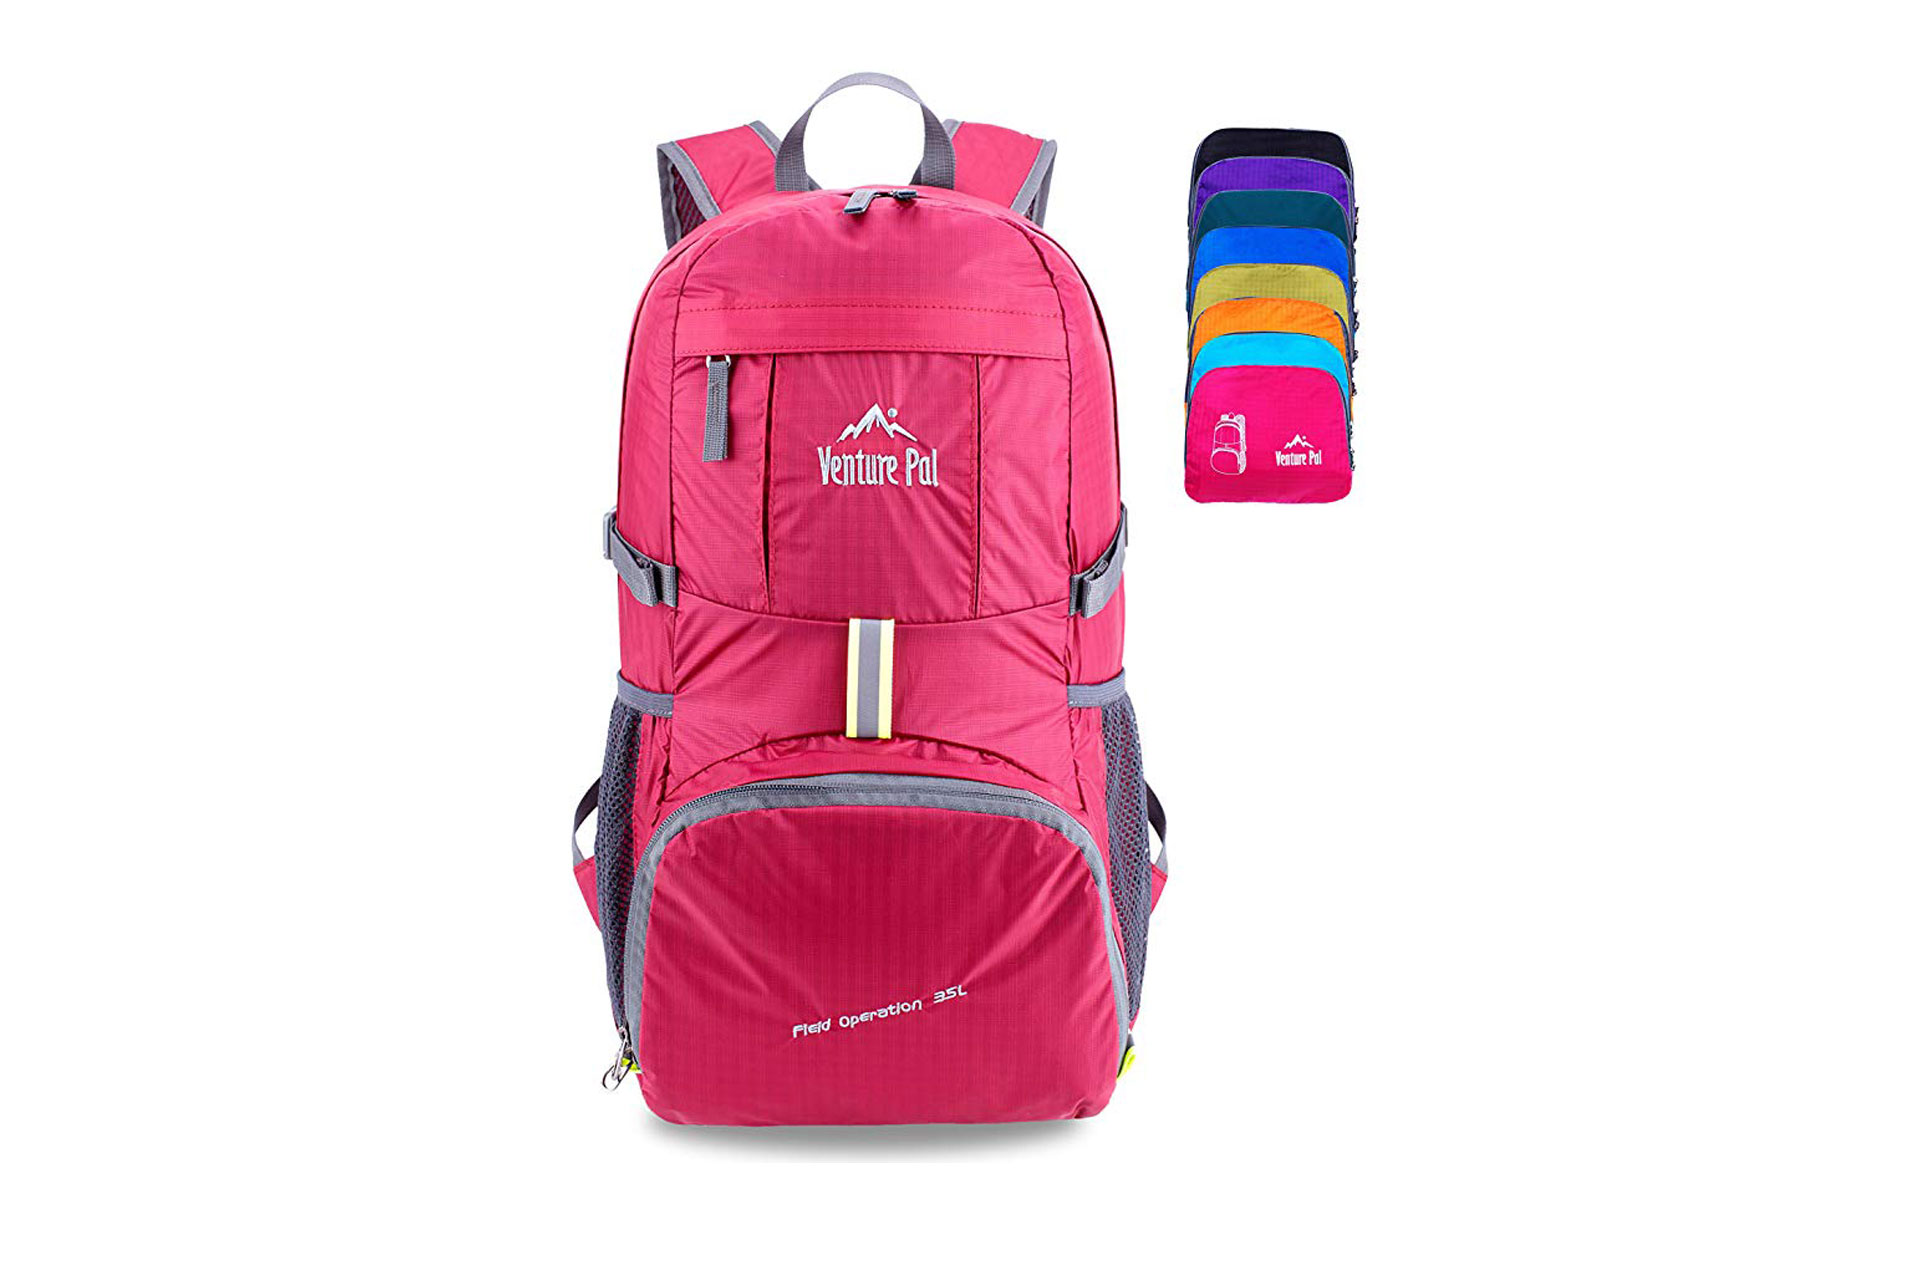 Venture Backpack; Courtesy of Amazon